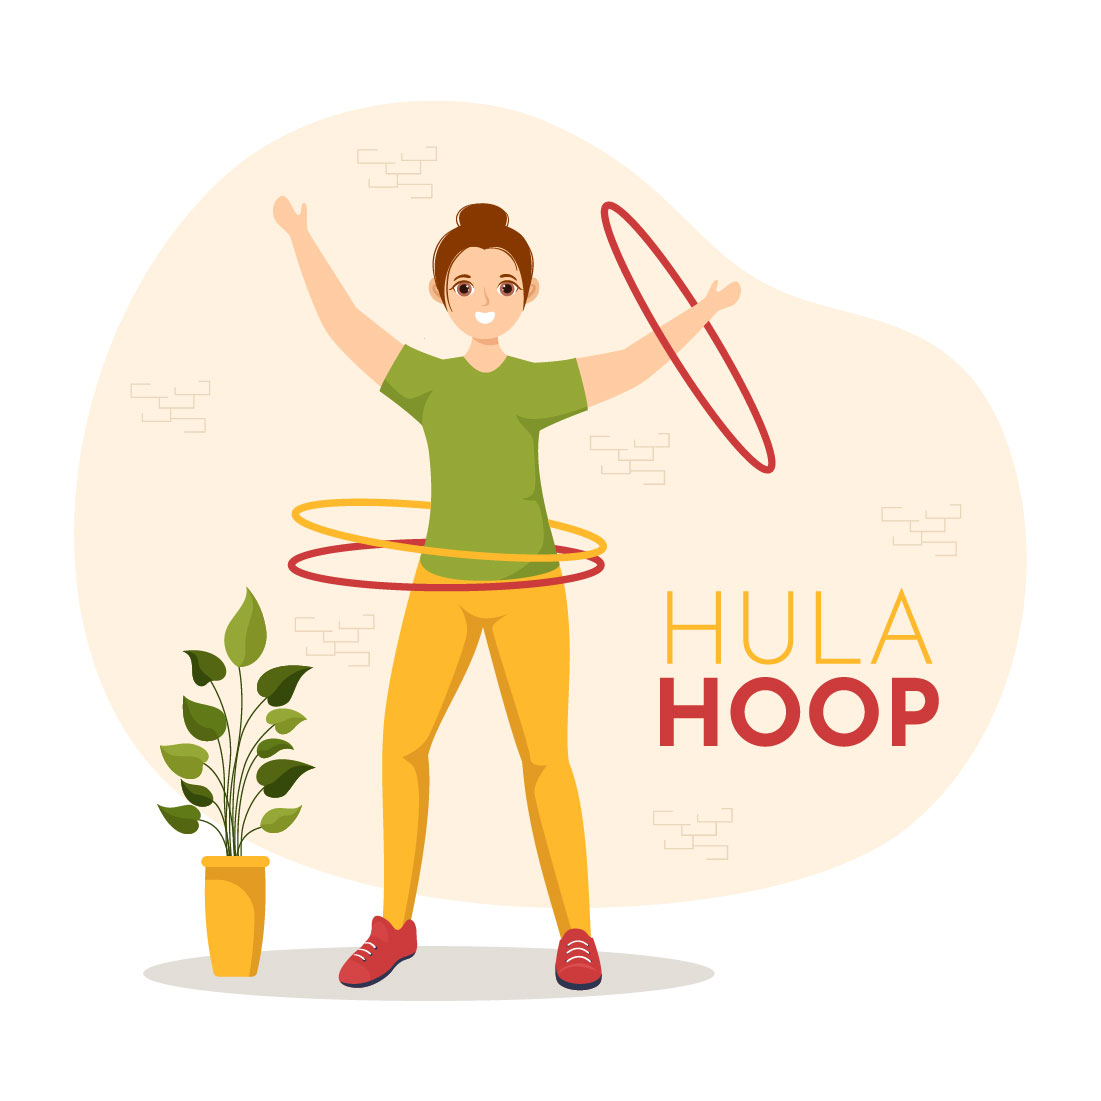 12 Playing Hula Hoop Illustration cover image.